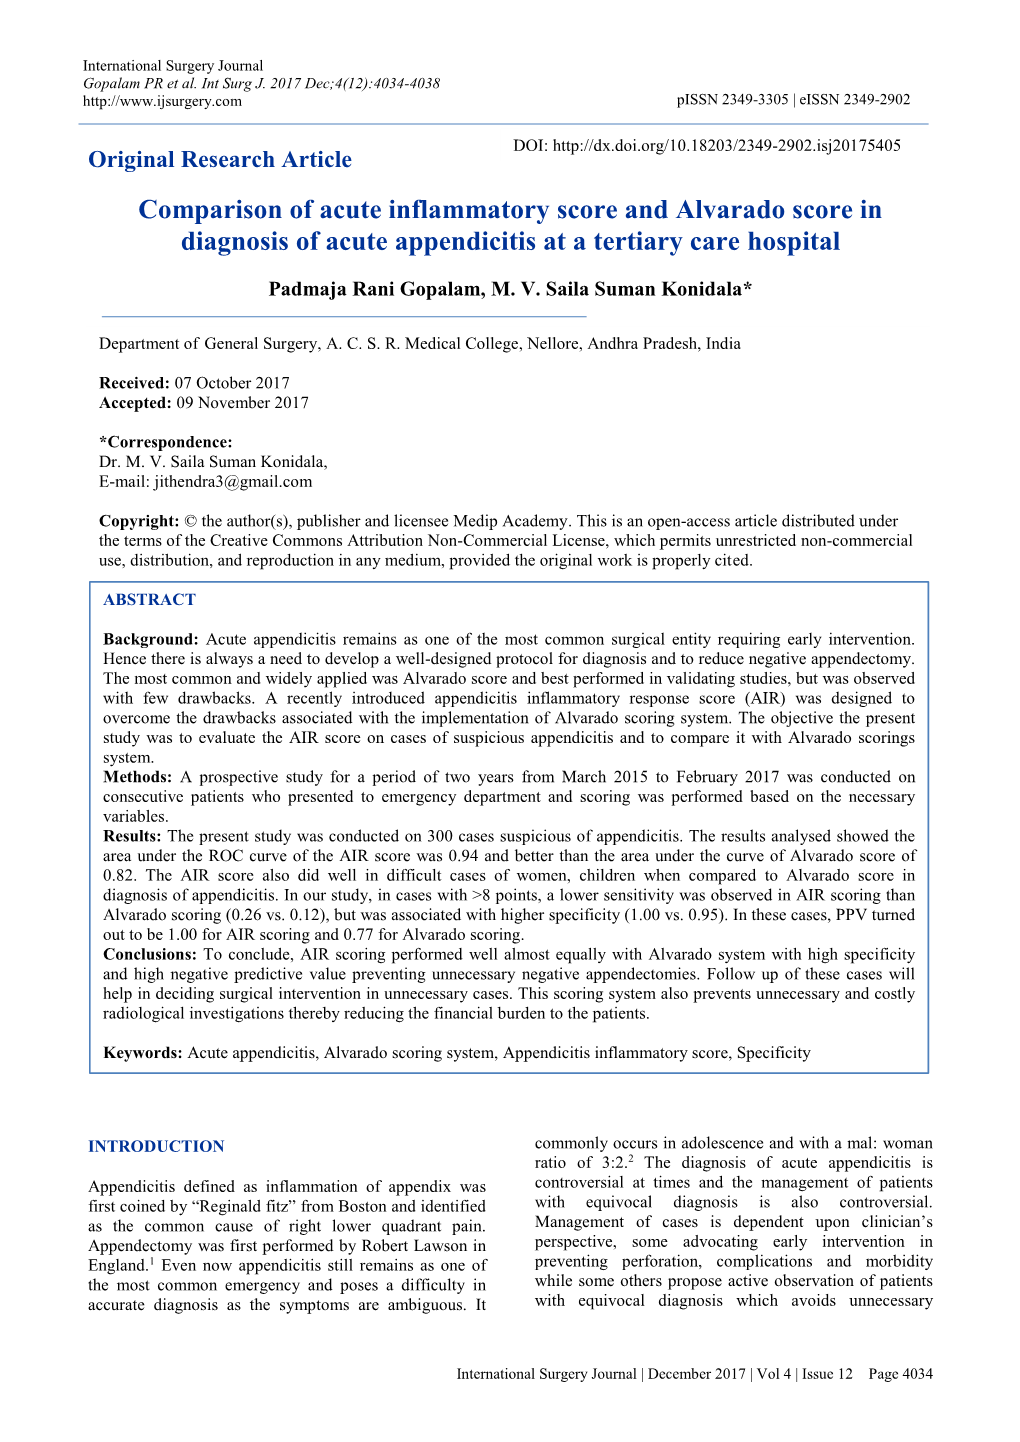 Comparison of Acute Inflammatory Score and Alvarado Score in Diagnosis of Acute Appendicitis at a Tertiary Care Hospital